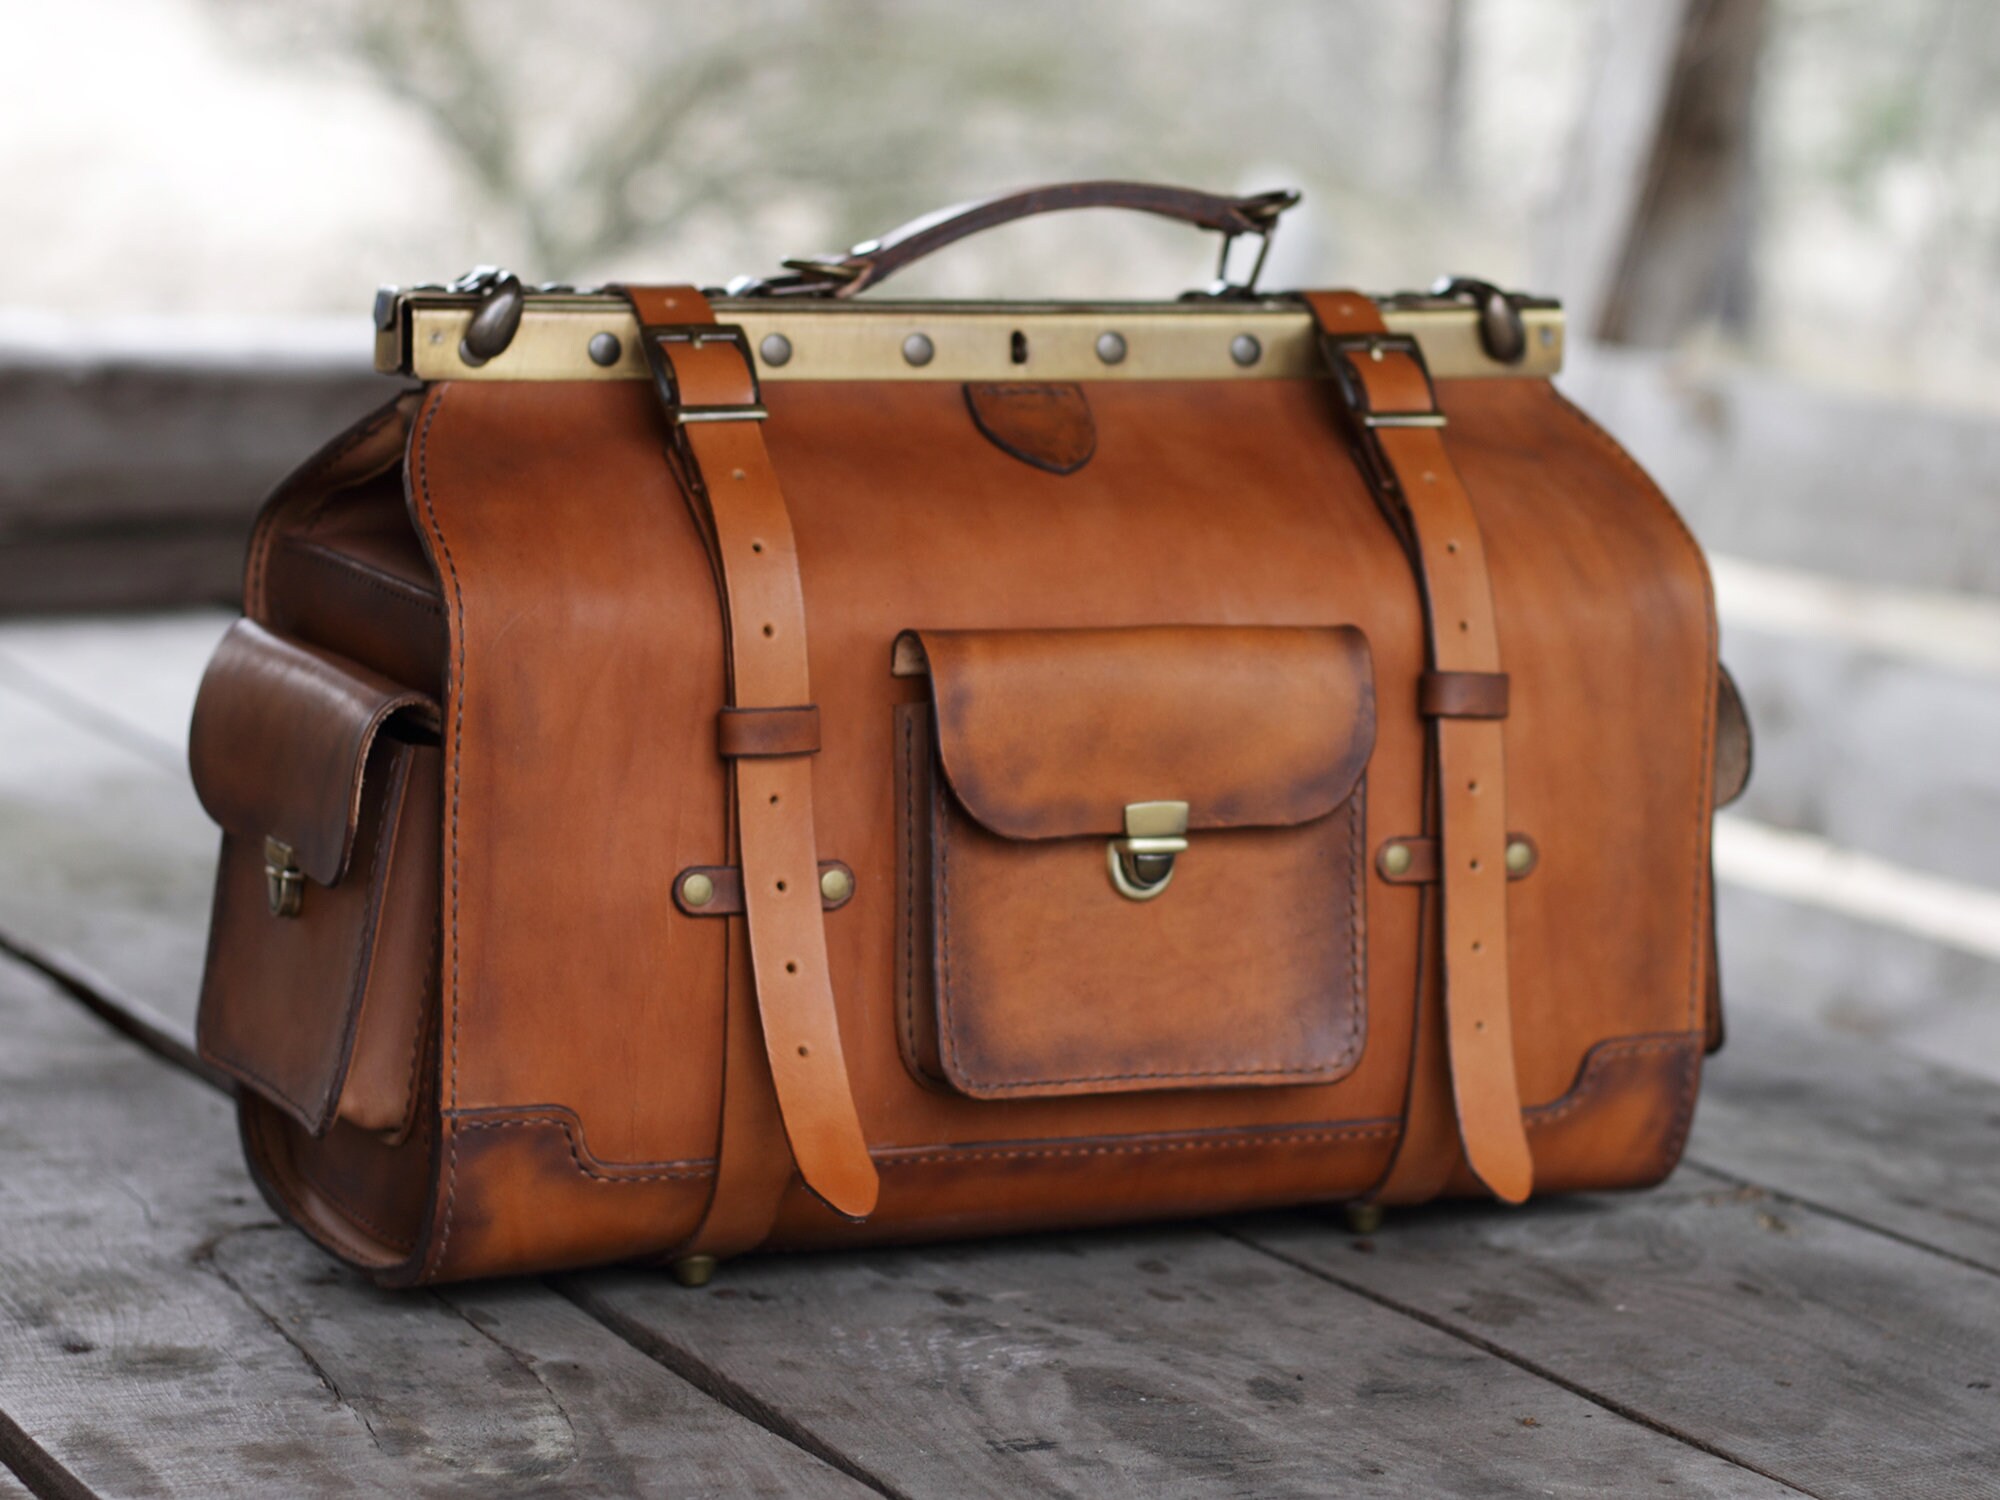 Leather Travel Bag Made of Orange Leather Handmade Carry-on | Etsy